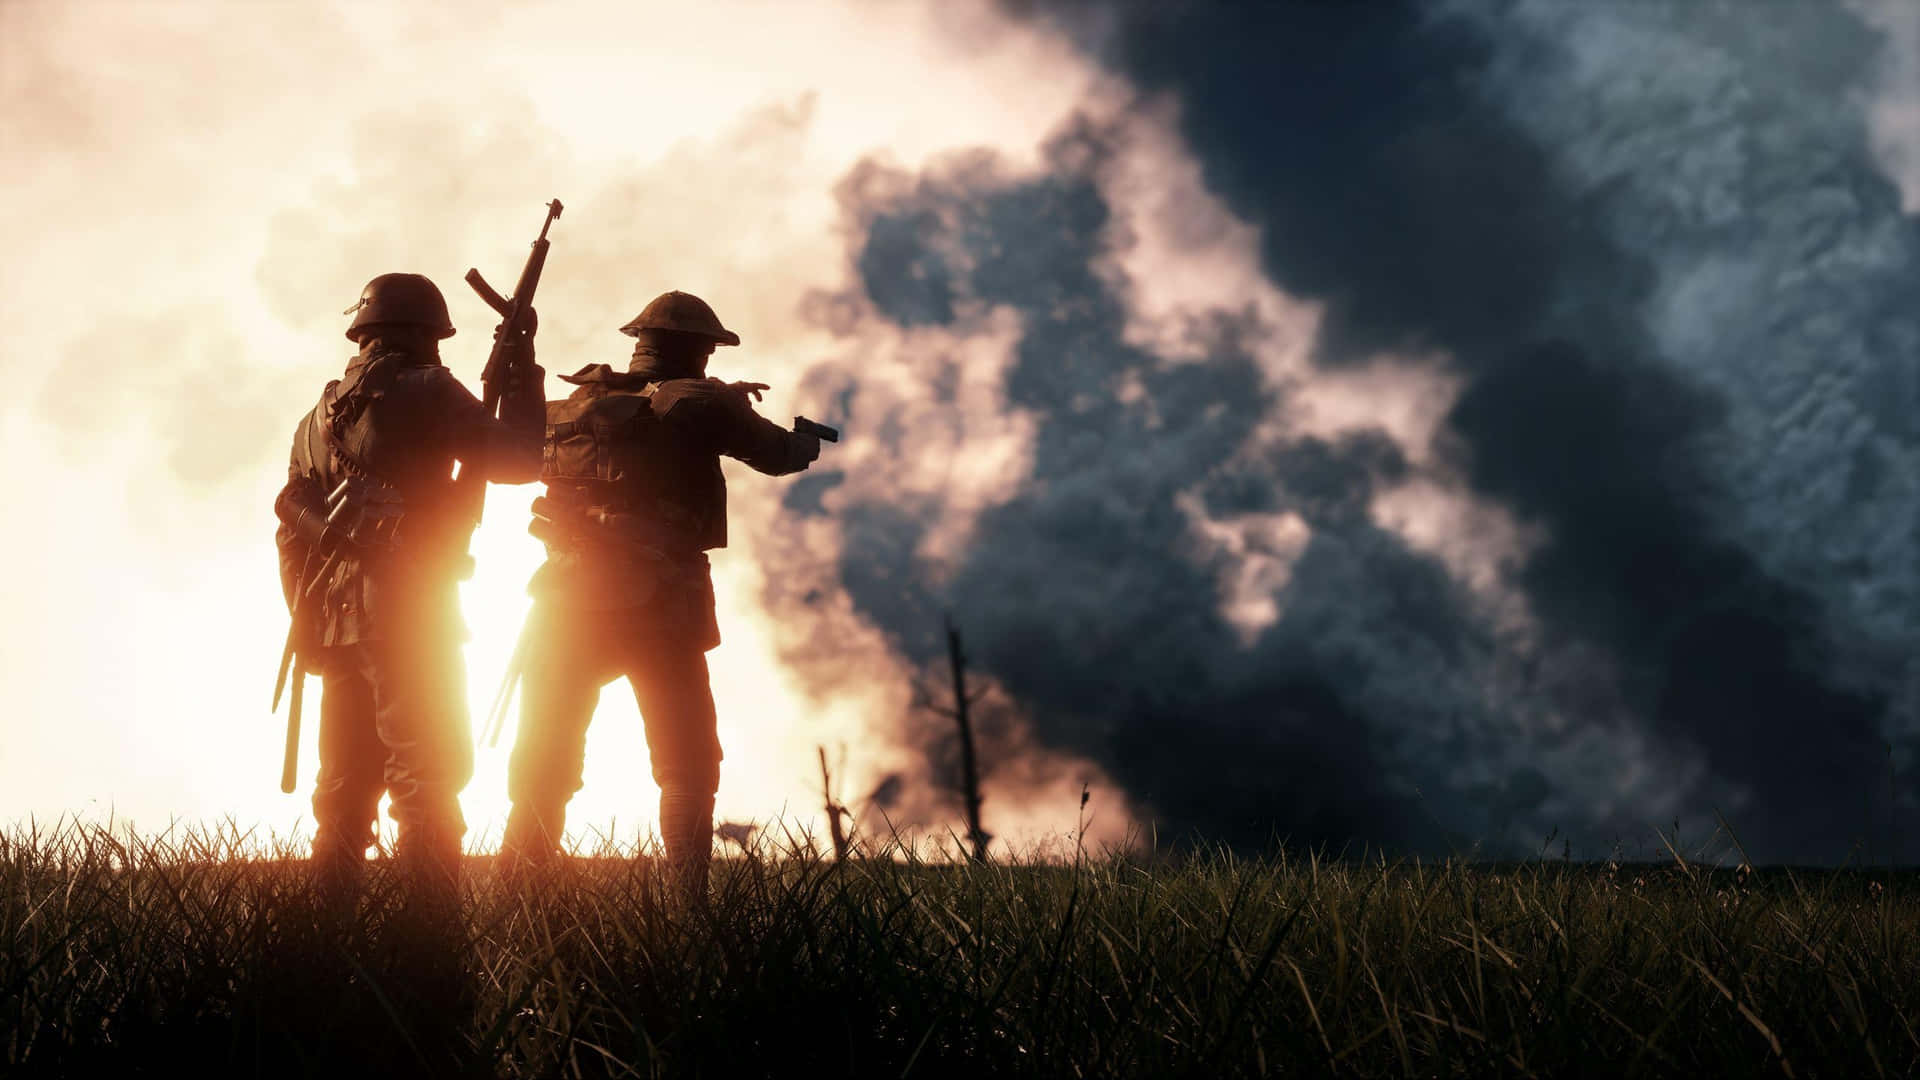 1440p Battlefield 1 Smoke Silhouette Background